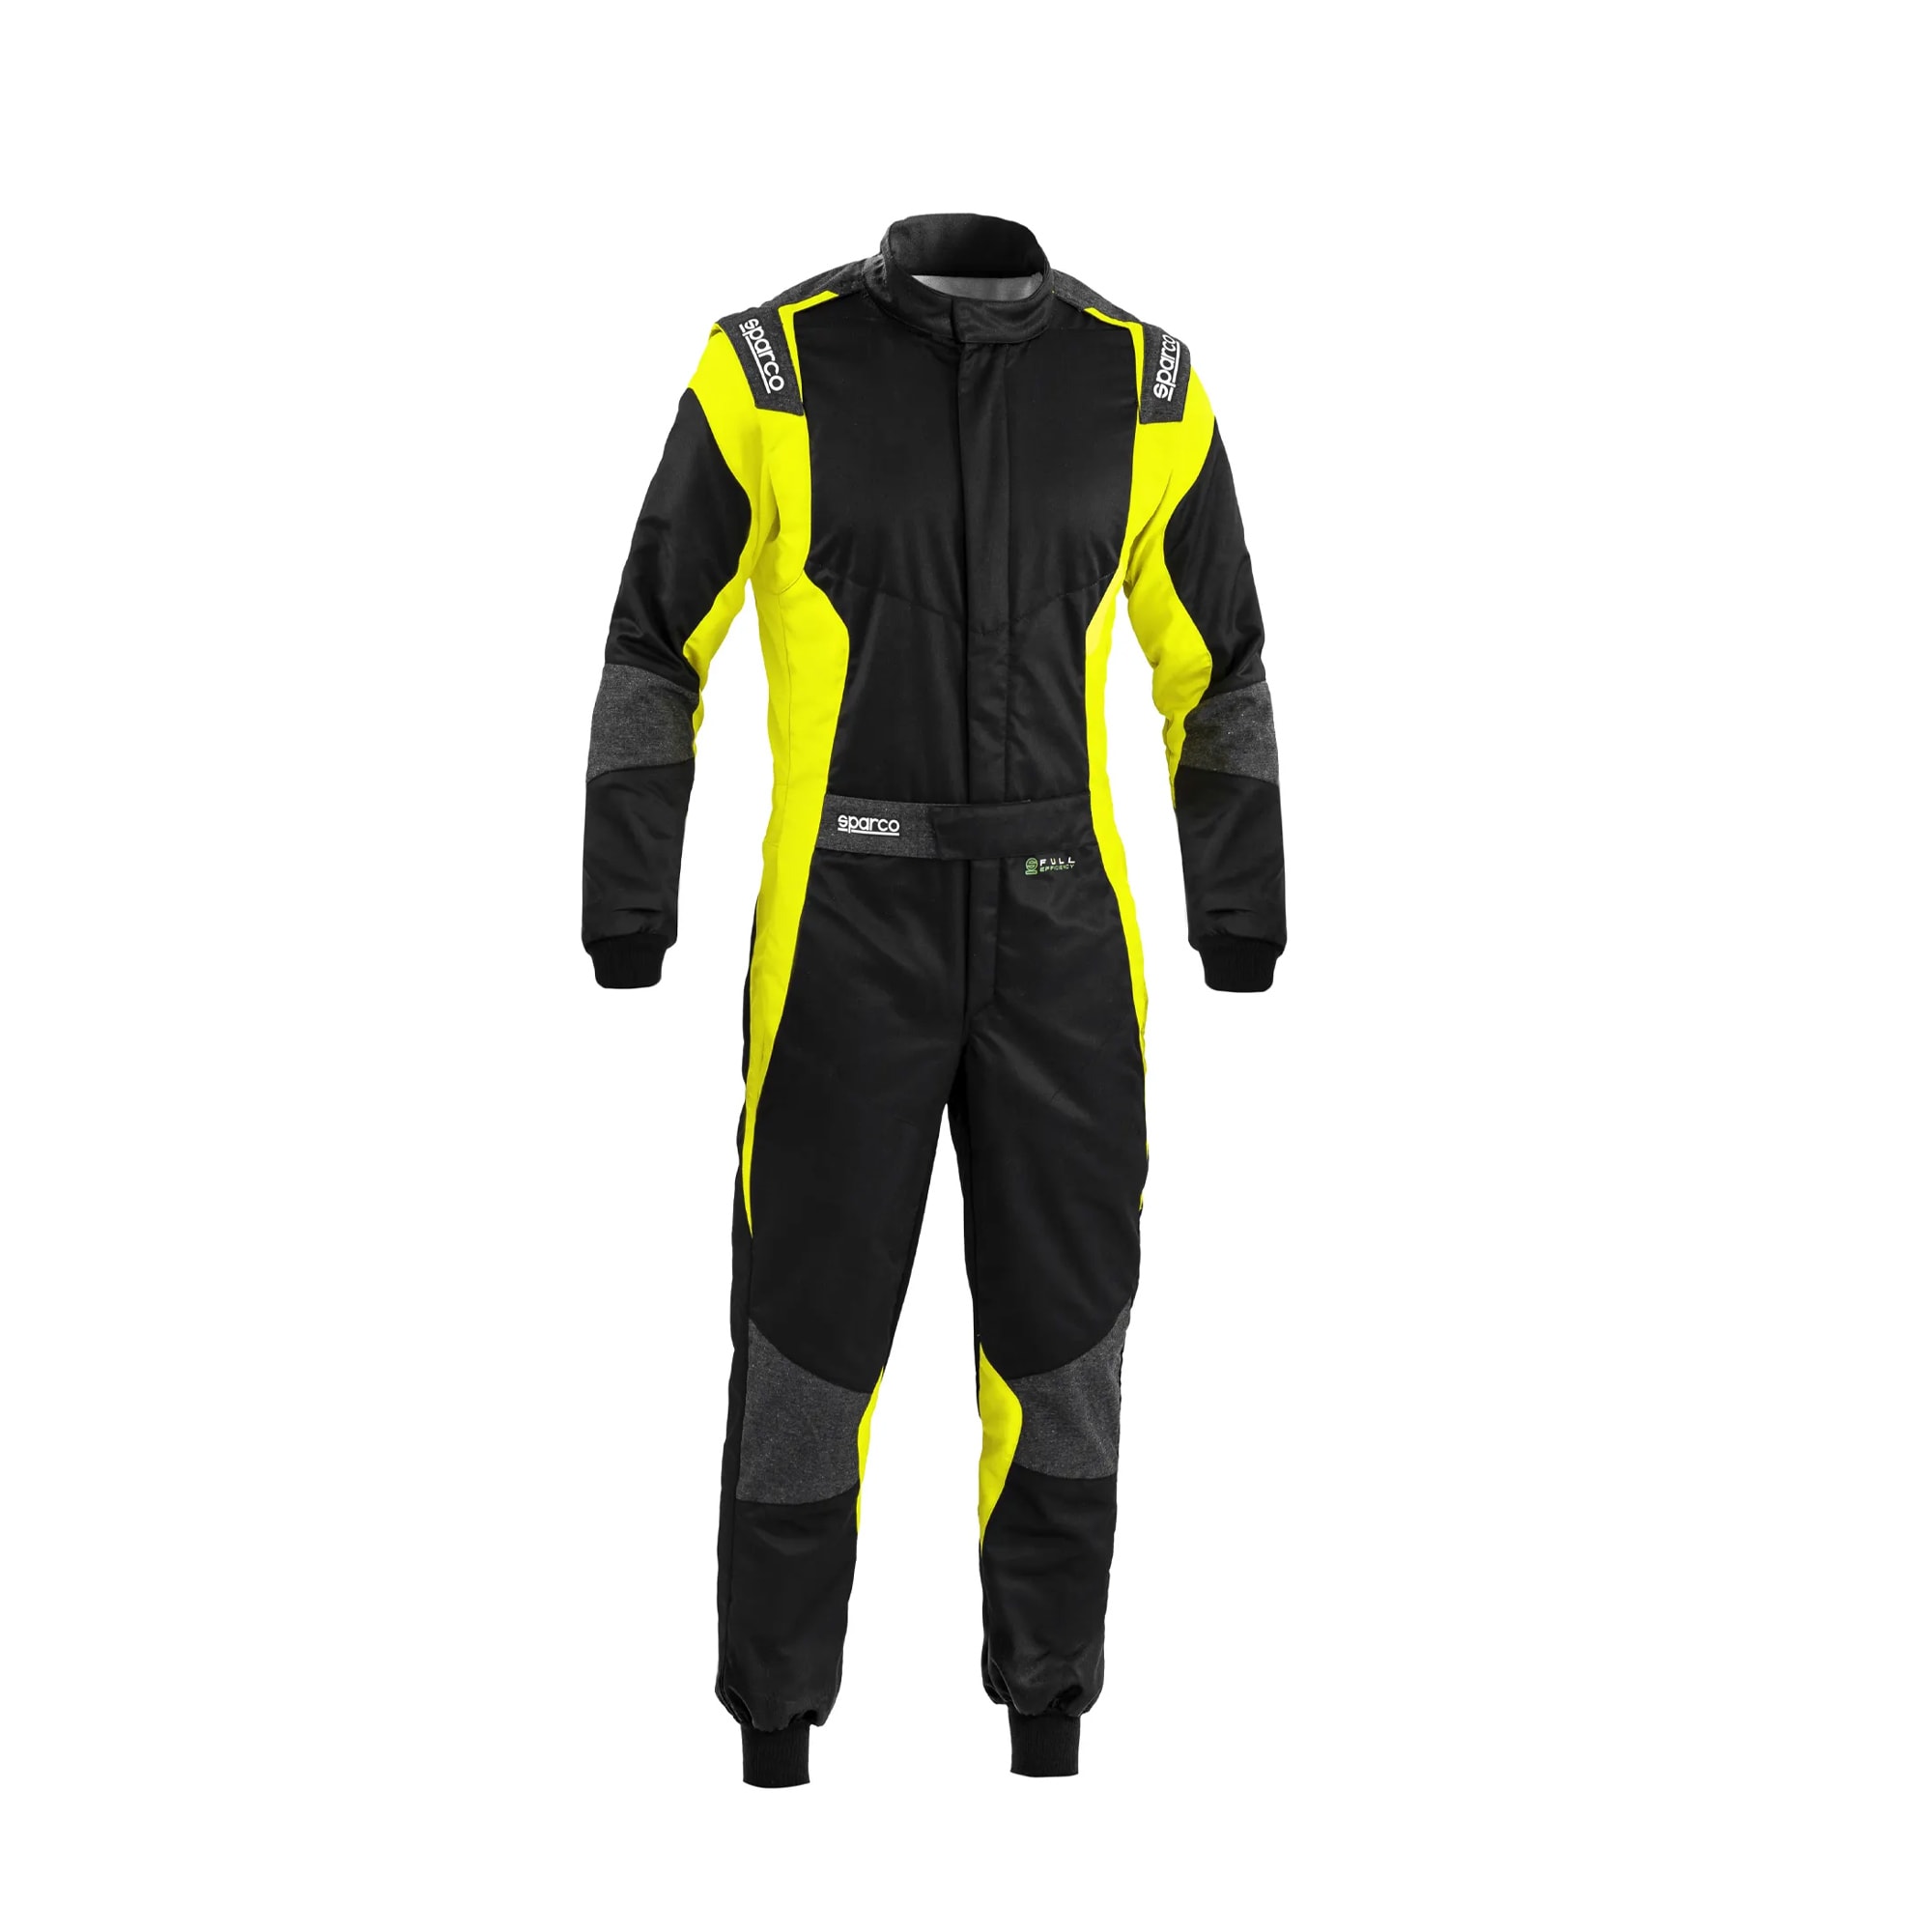 Racing Suit Sparco Futura R579 Sort/Gul